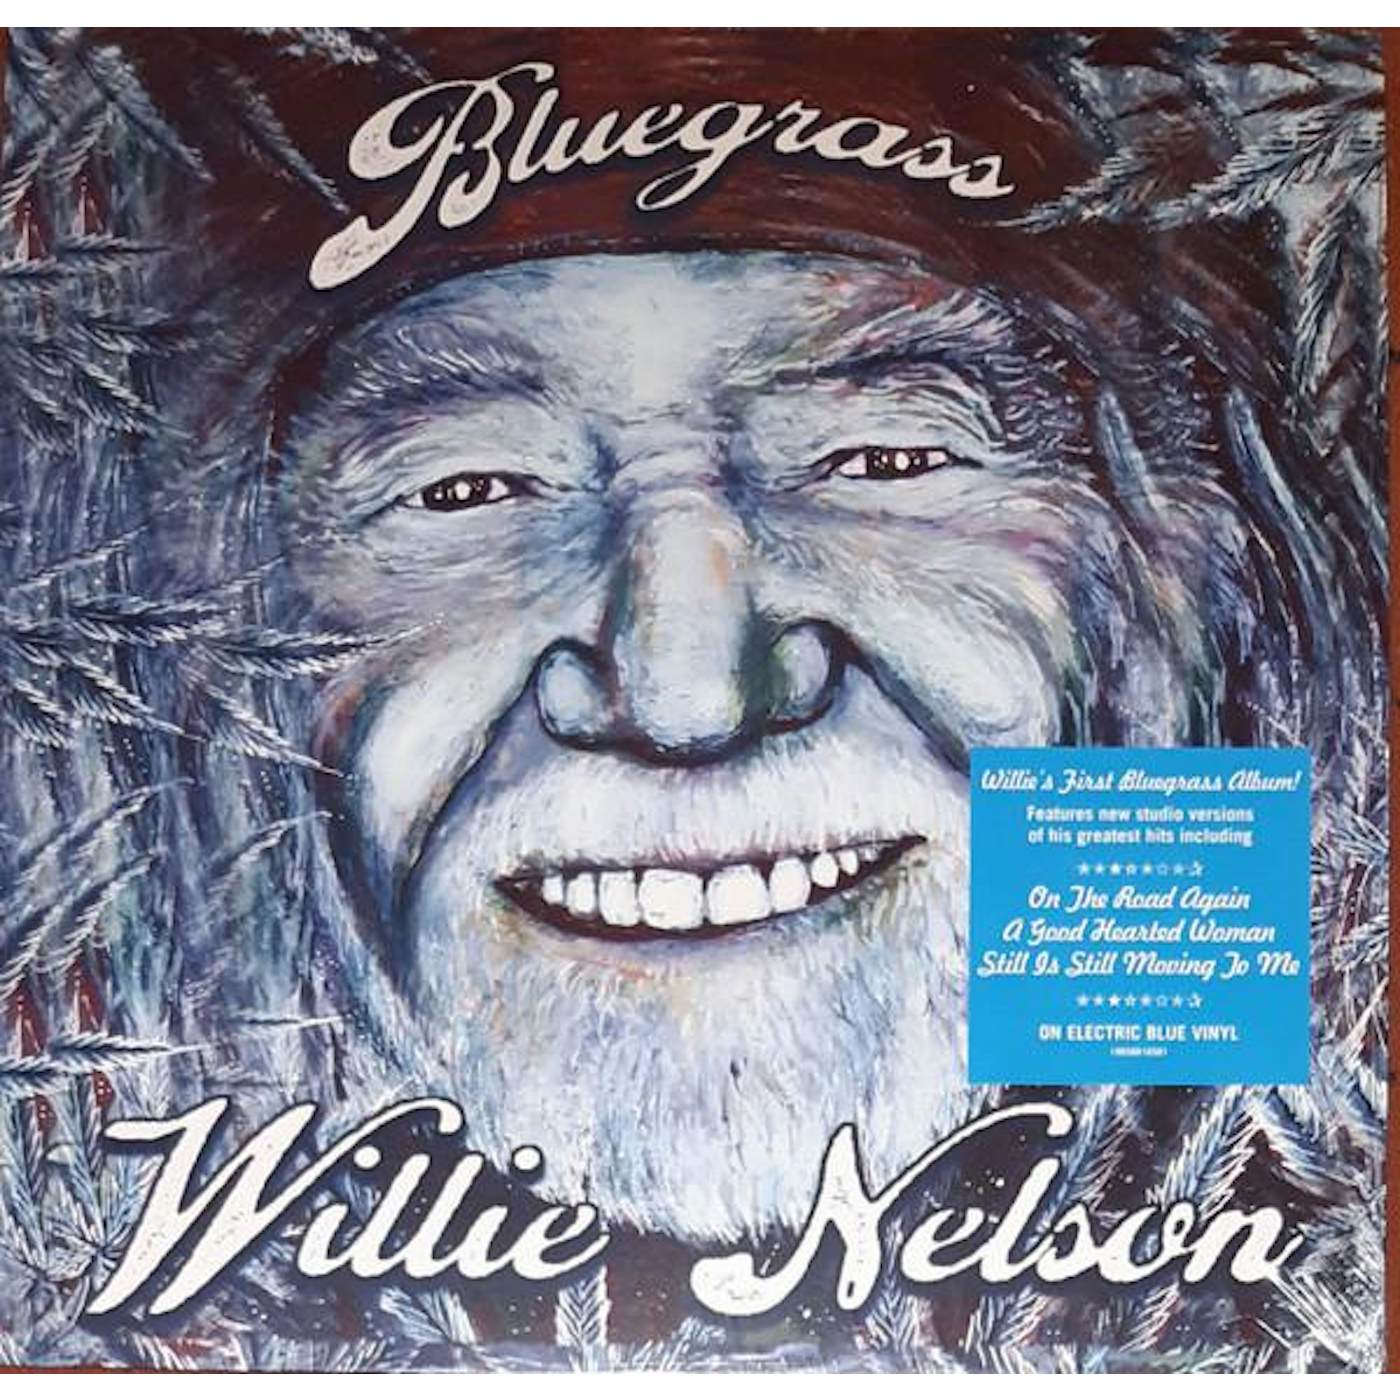 Willie Nelson Bluegrass (Electric Blue) Vinyl Record